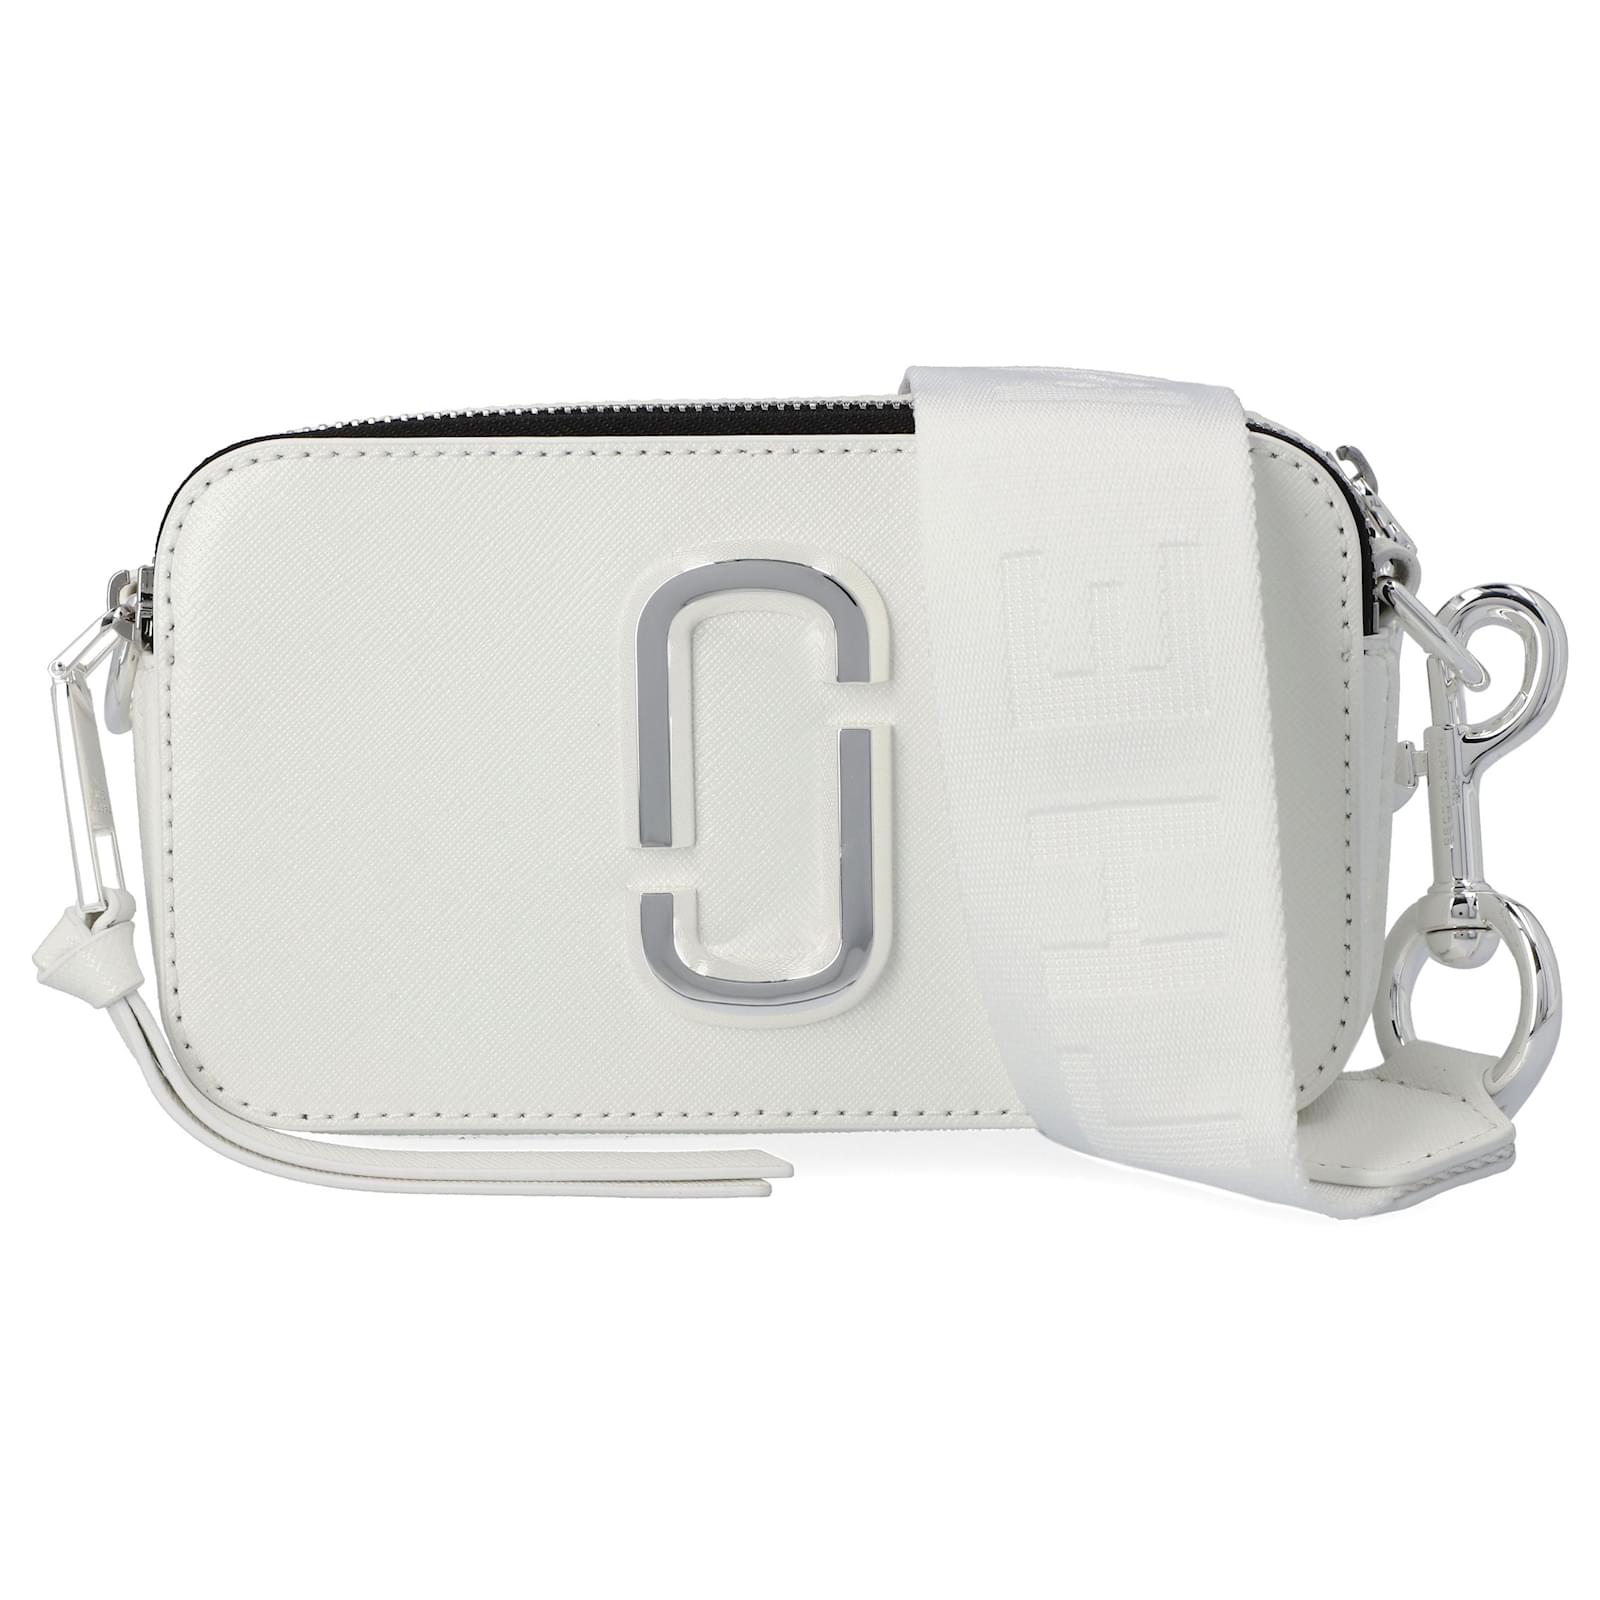 Marc Jacobs Snapshot Camera Bag in White